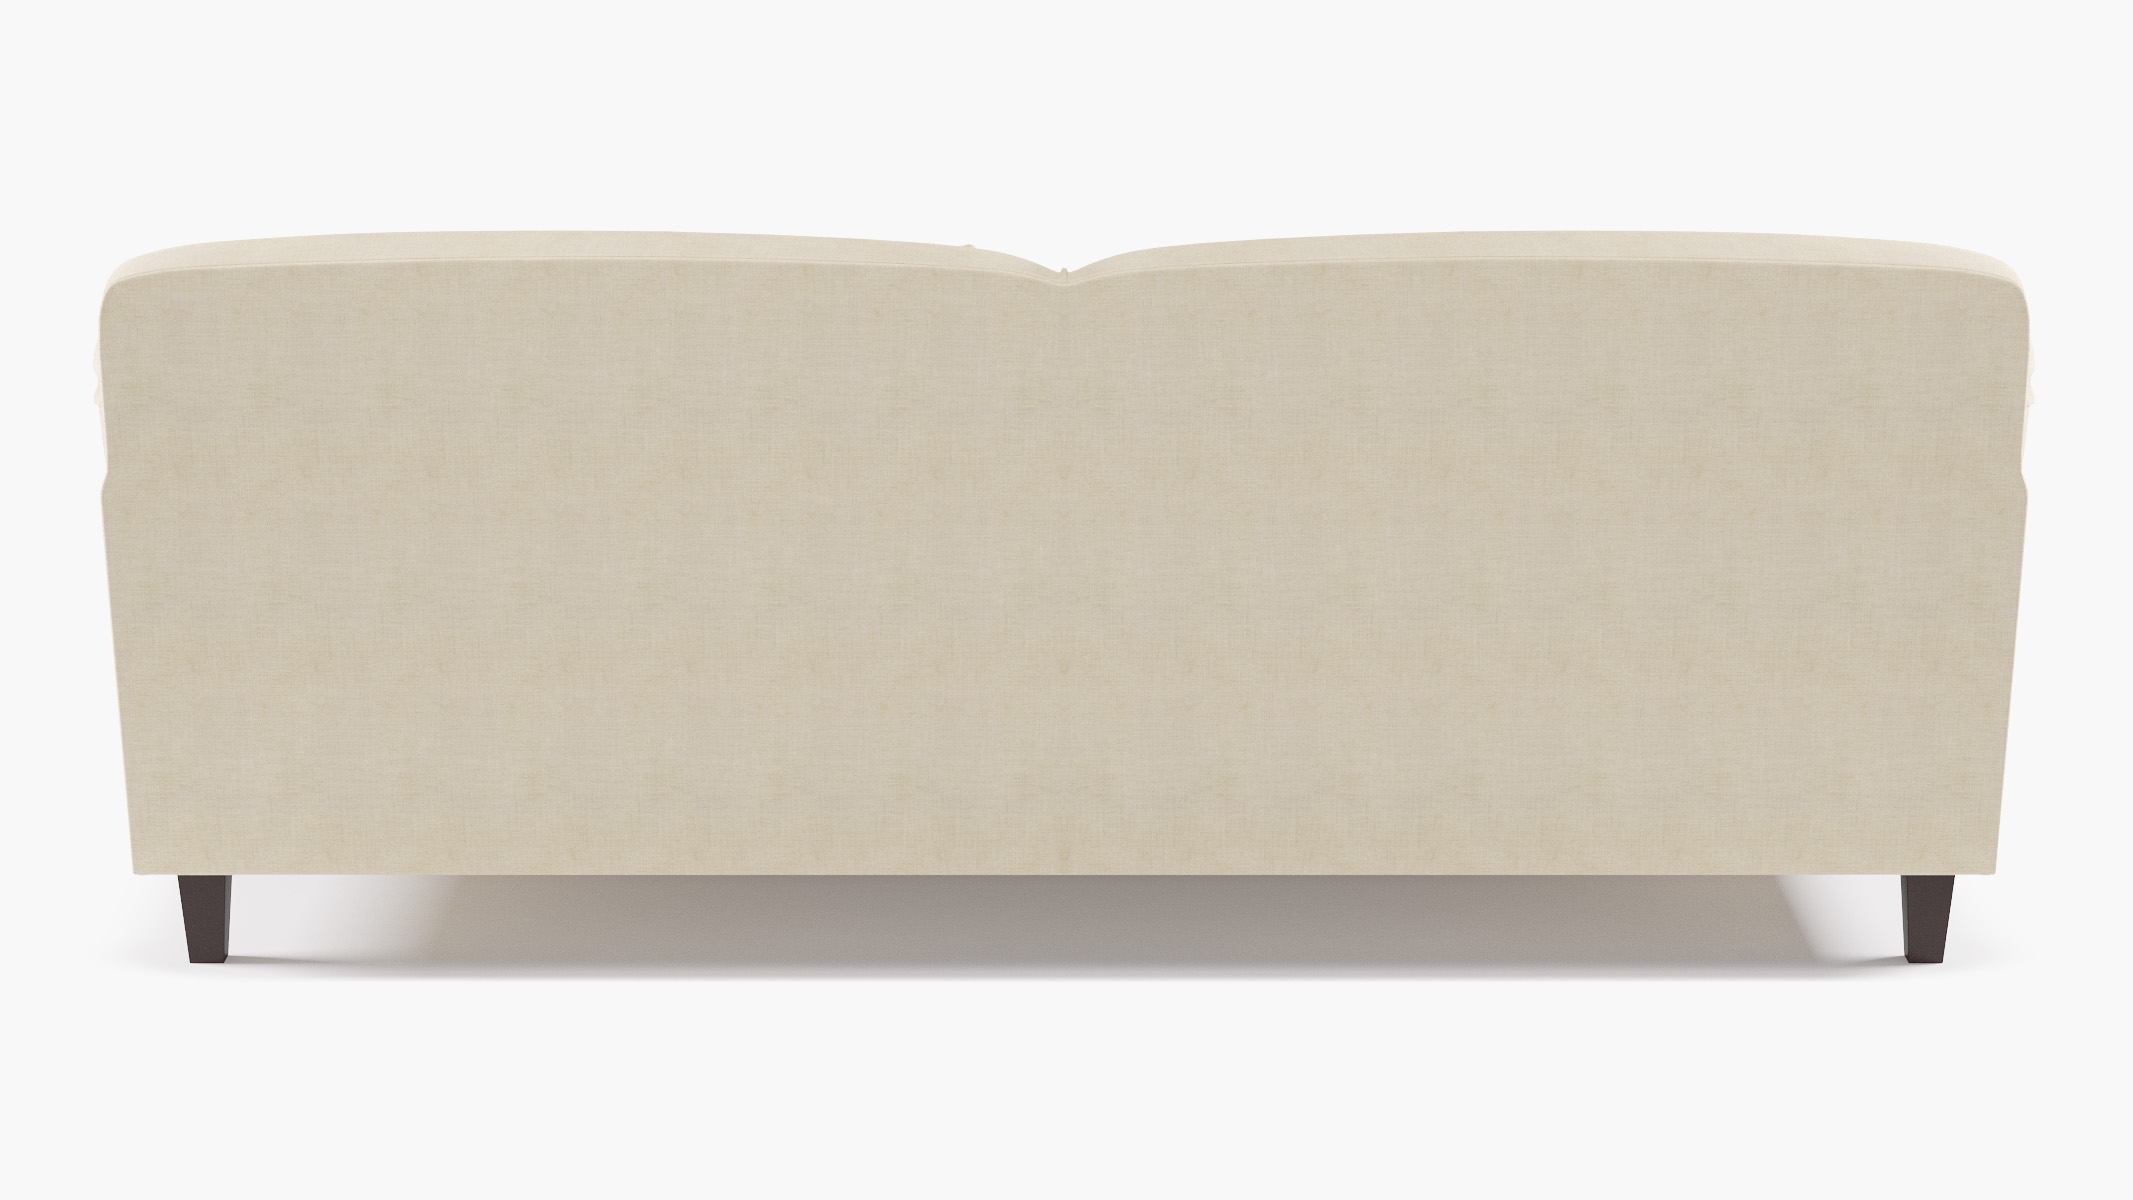 English Roll Arm Sofa, Talc Everyday Linen, Walnut - Image 3